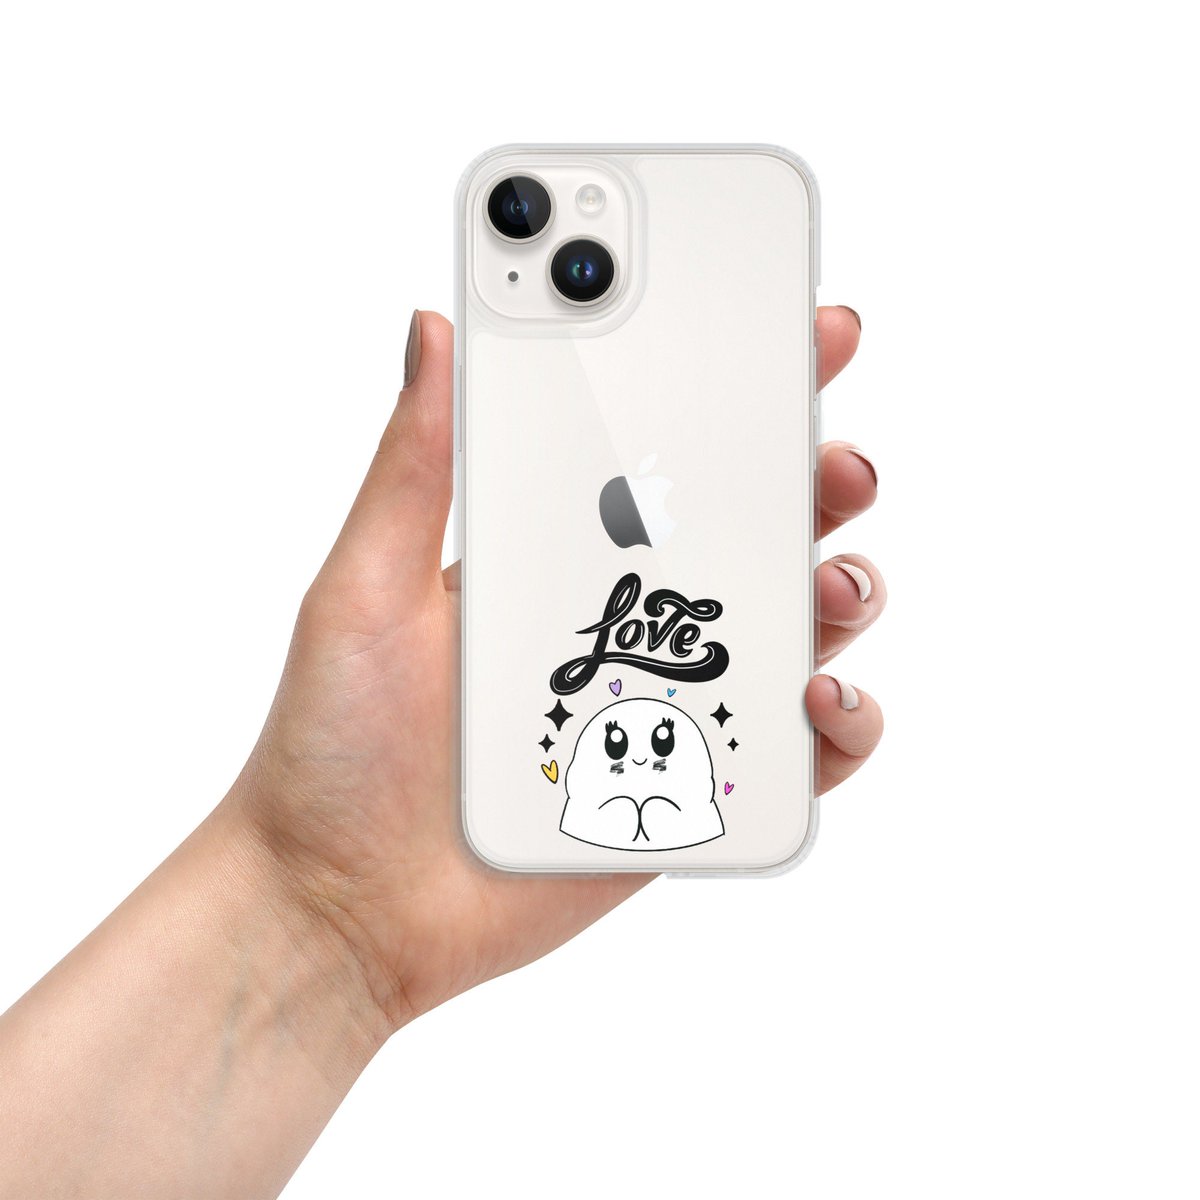 Cute Ghost iPhone Case etsy.me/3XVFToD #animecartoon #cuteghostphone #giftsforgirlfriend #ghostgraphicphone #valentinesdayphone #bfgfgiftlove #couplesgiftidea #relationshipsgift #ghostphonegiftbf